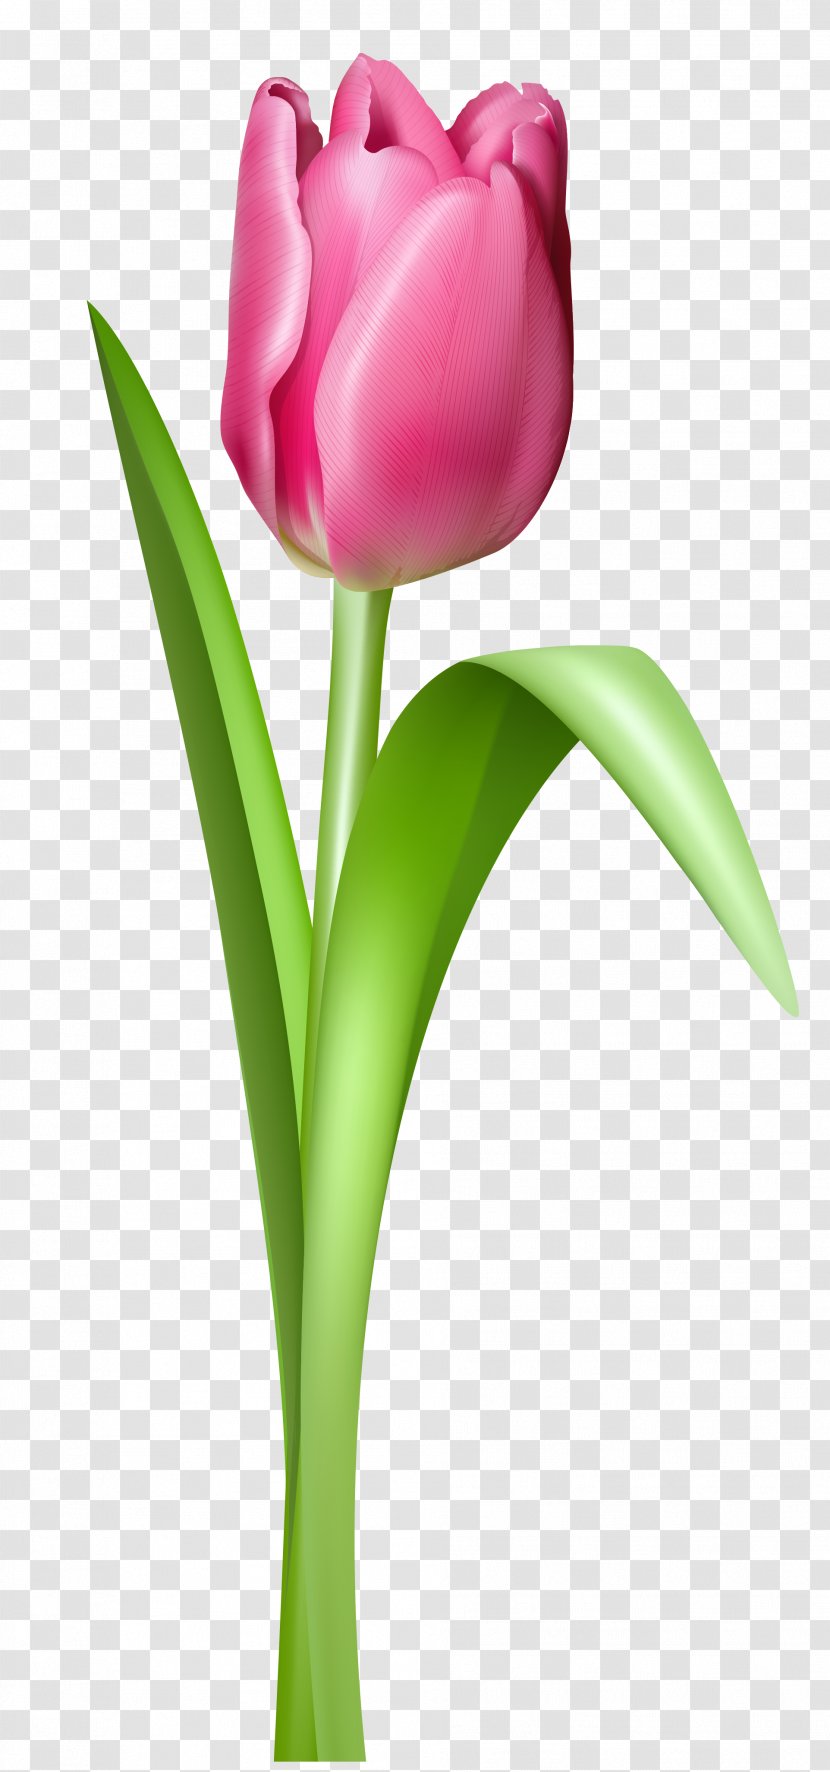 Flower Clip Art - Rose Family - Tulip Free Download Transparent PNG